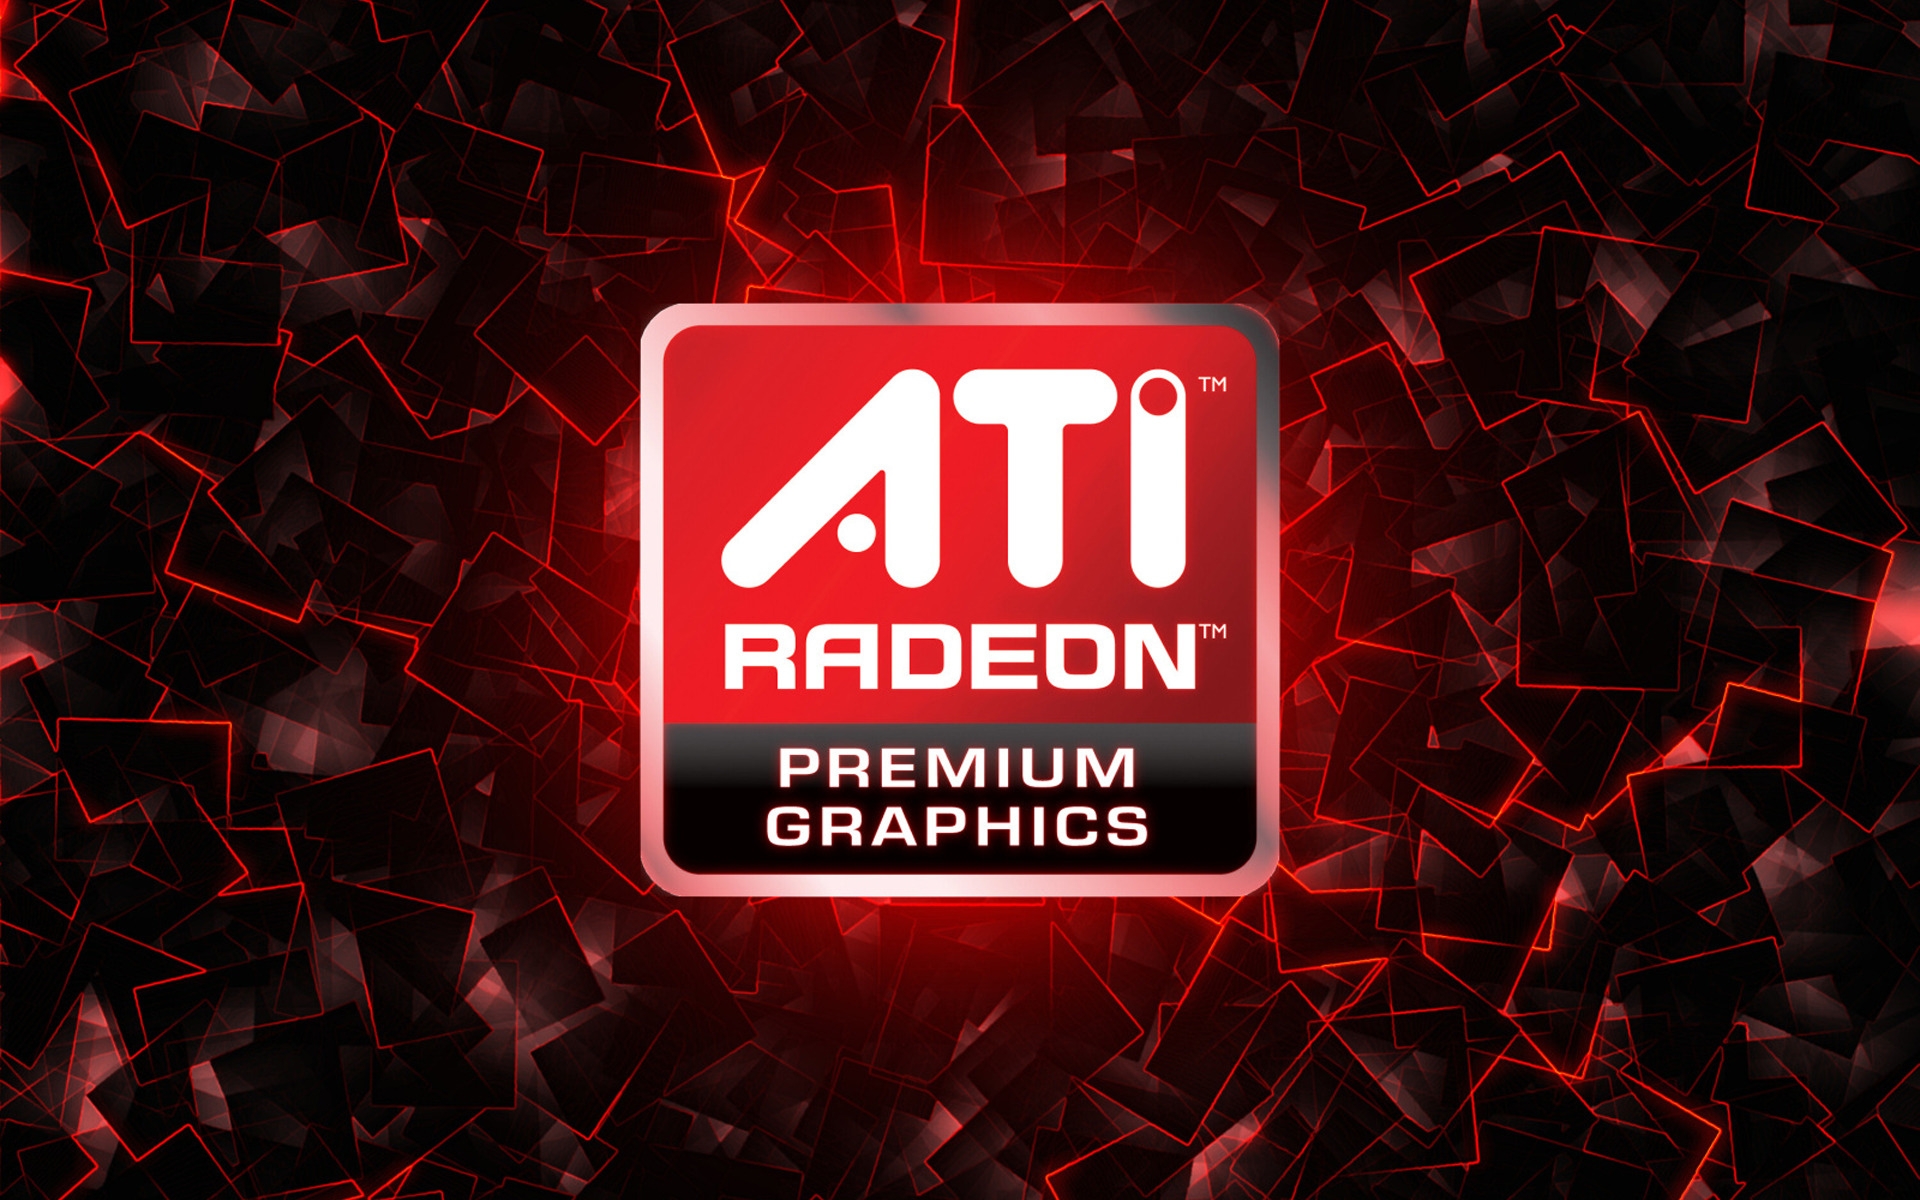 ATI Radeon Premium Graphics for 1920 x 1200 widescreen resolution